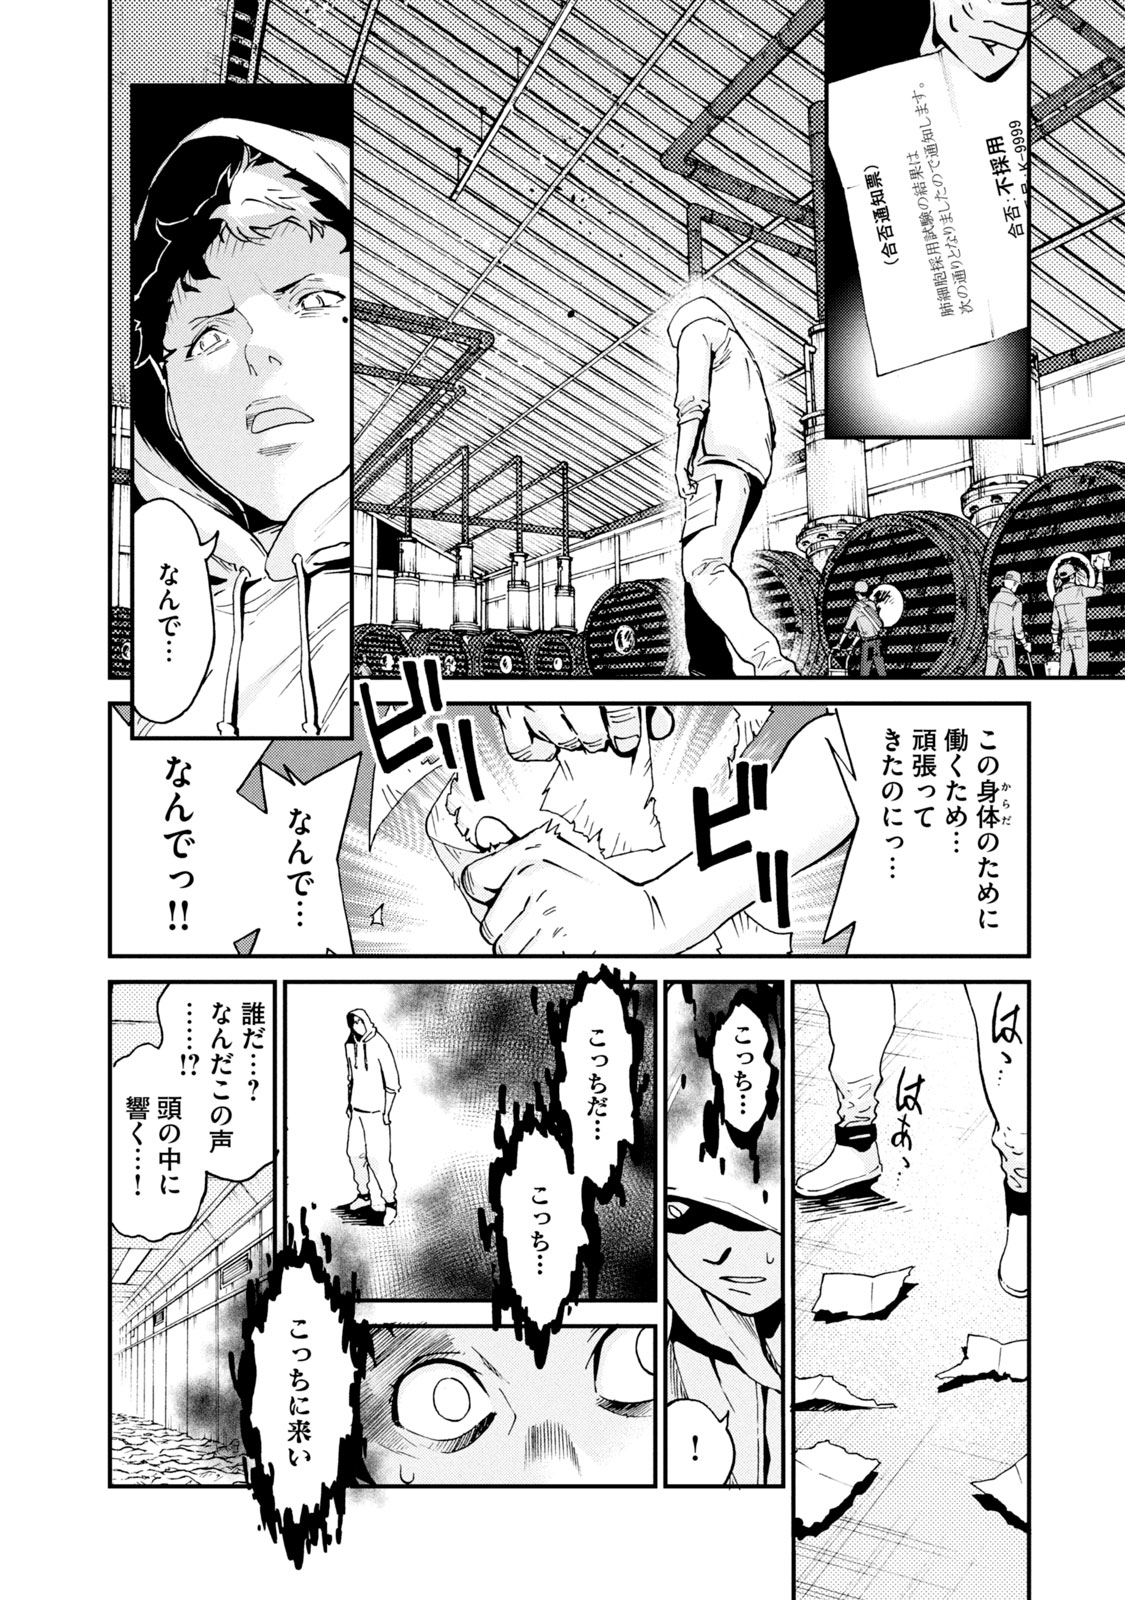 Hataraku Saibou BLACK - Chapter 37 - Page 18